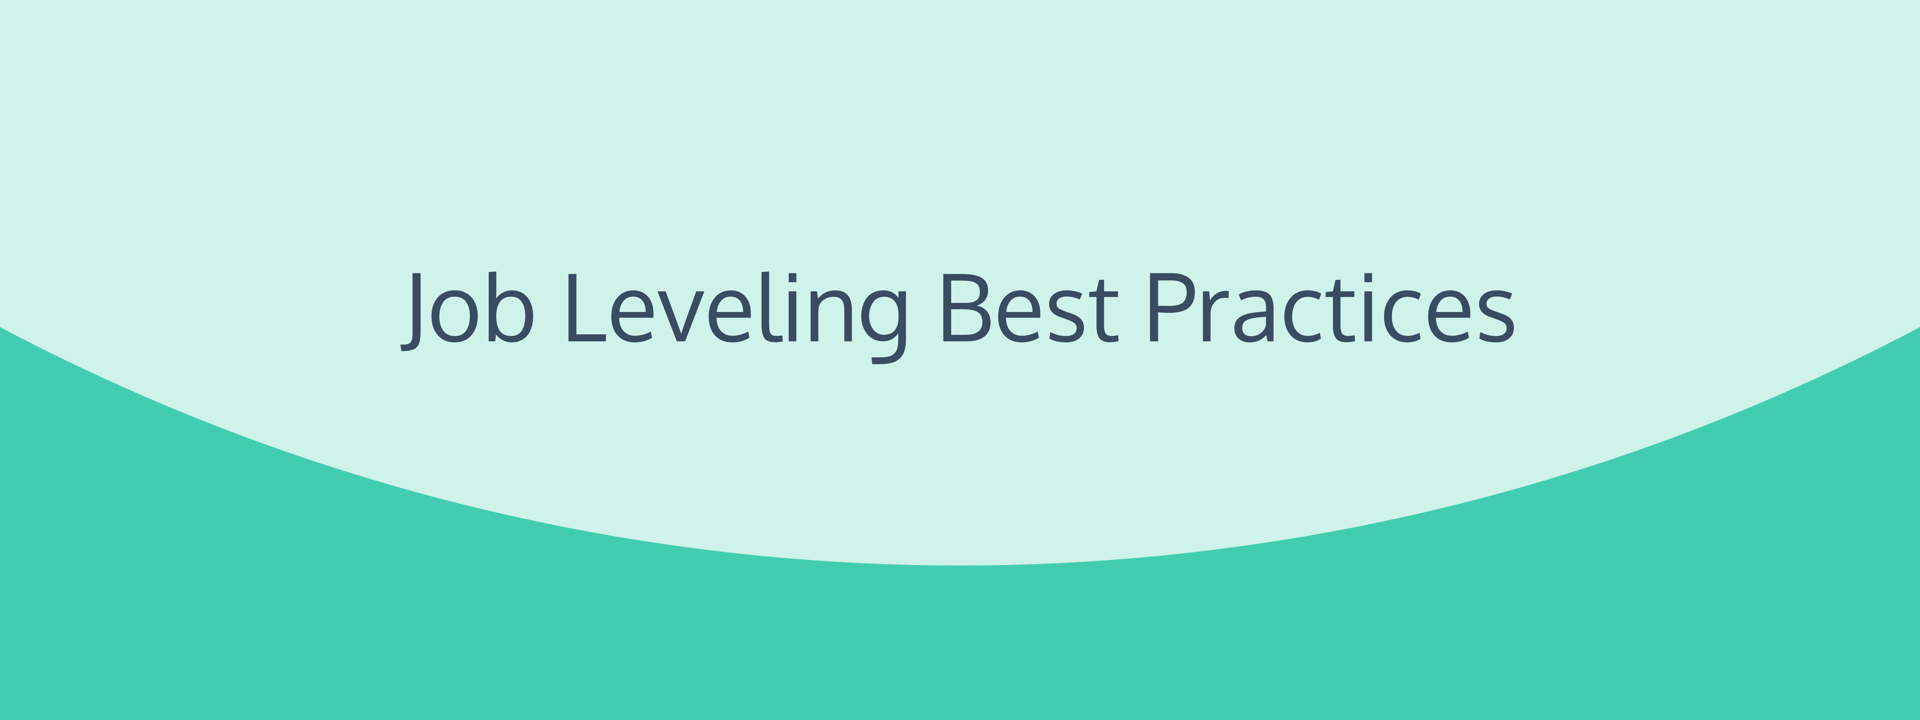 Job Leveling Best Practices